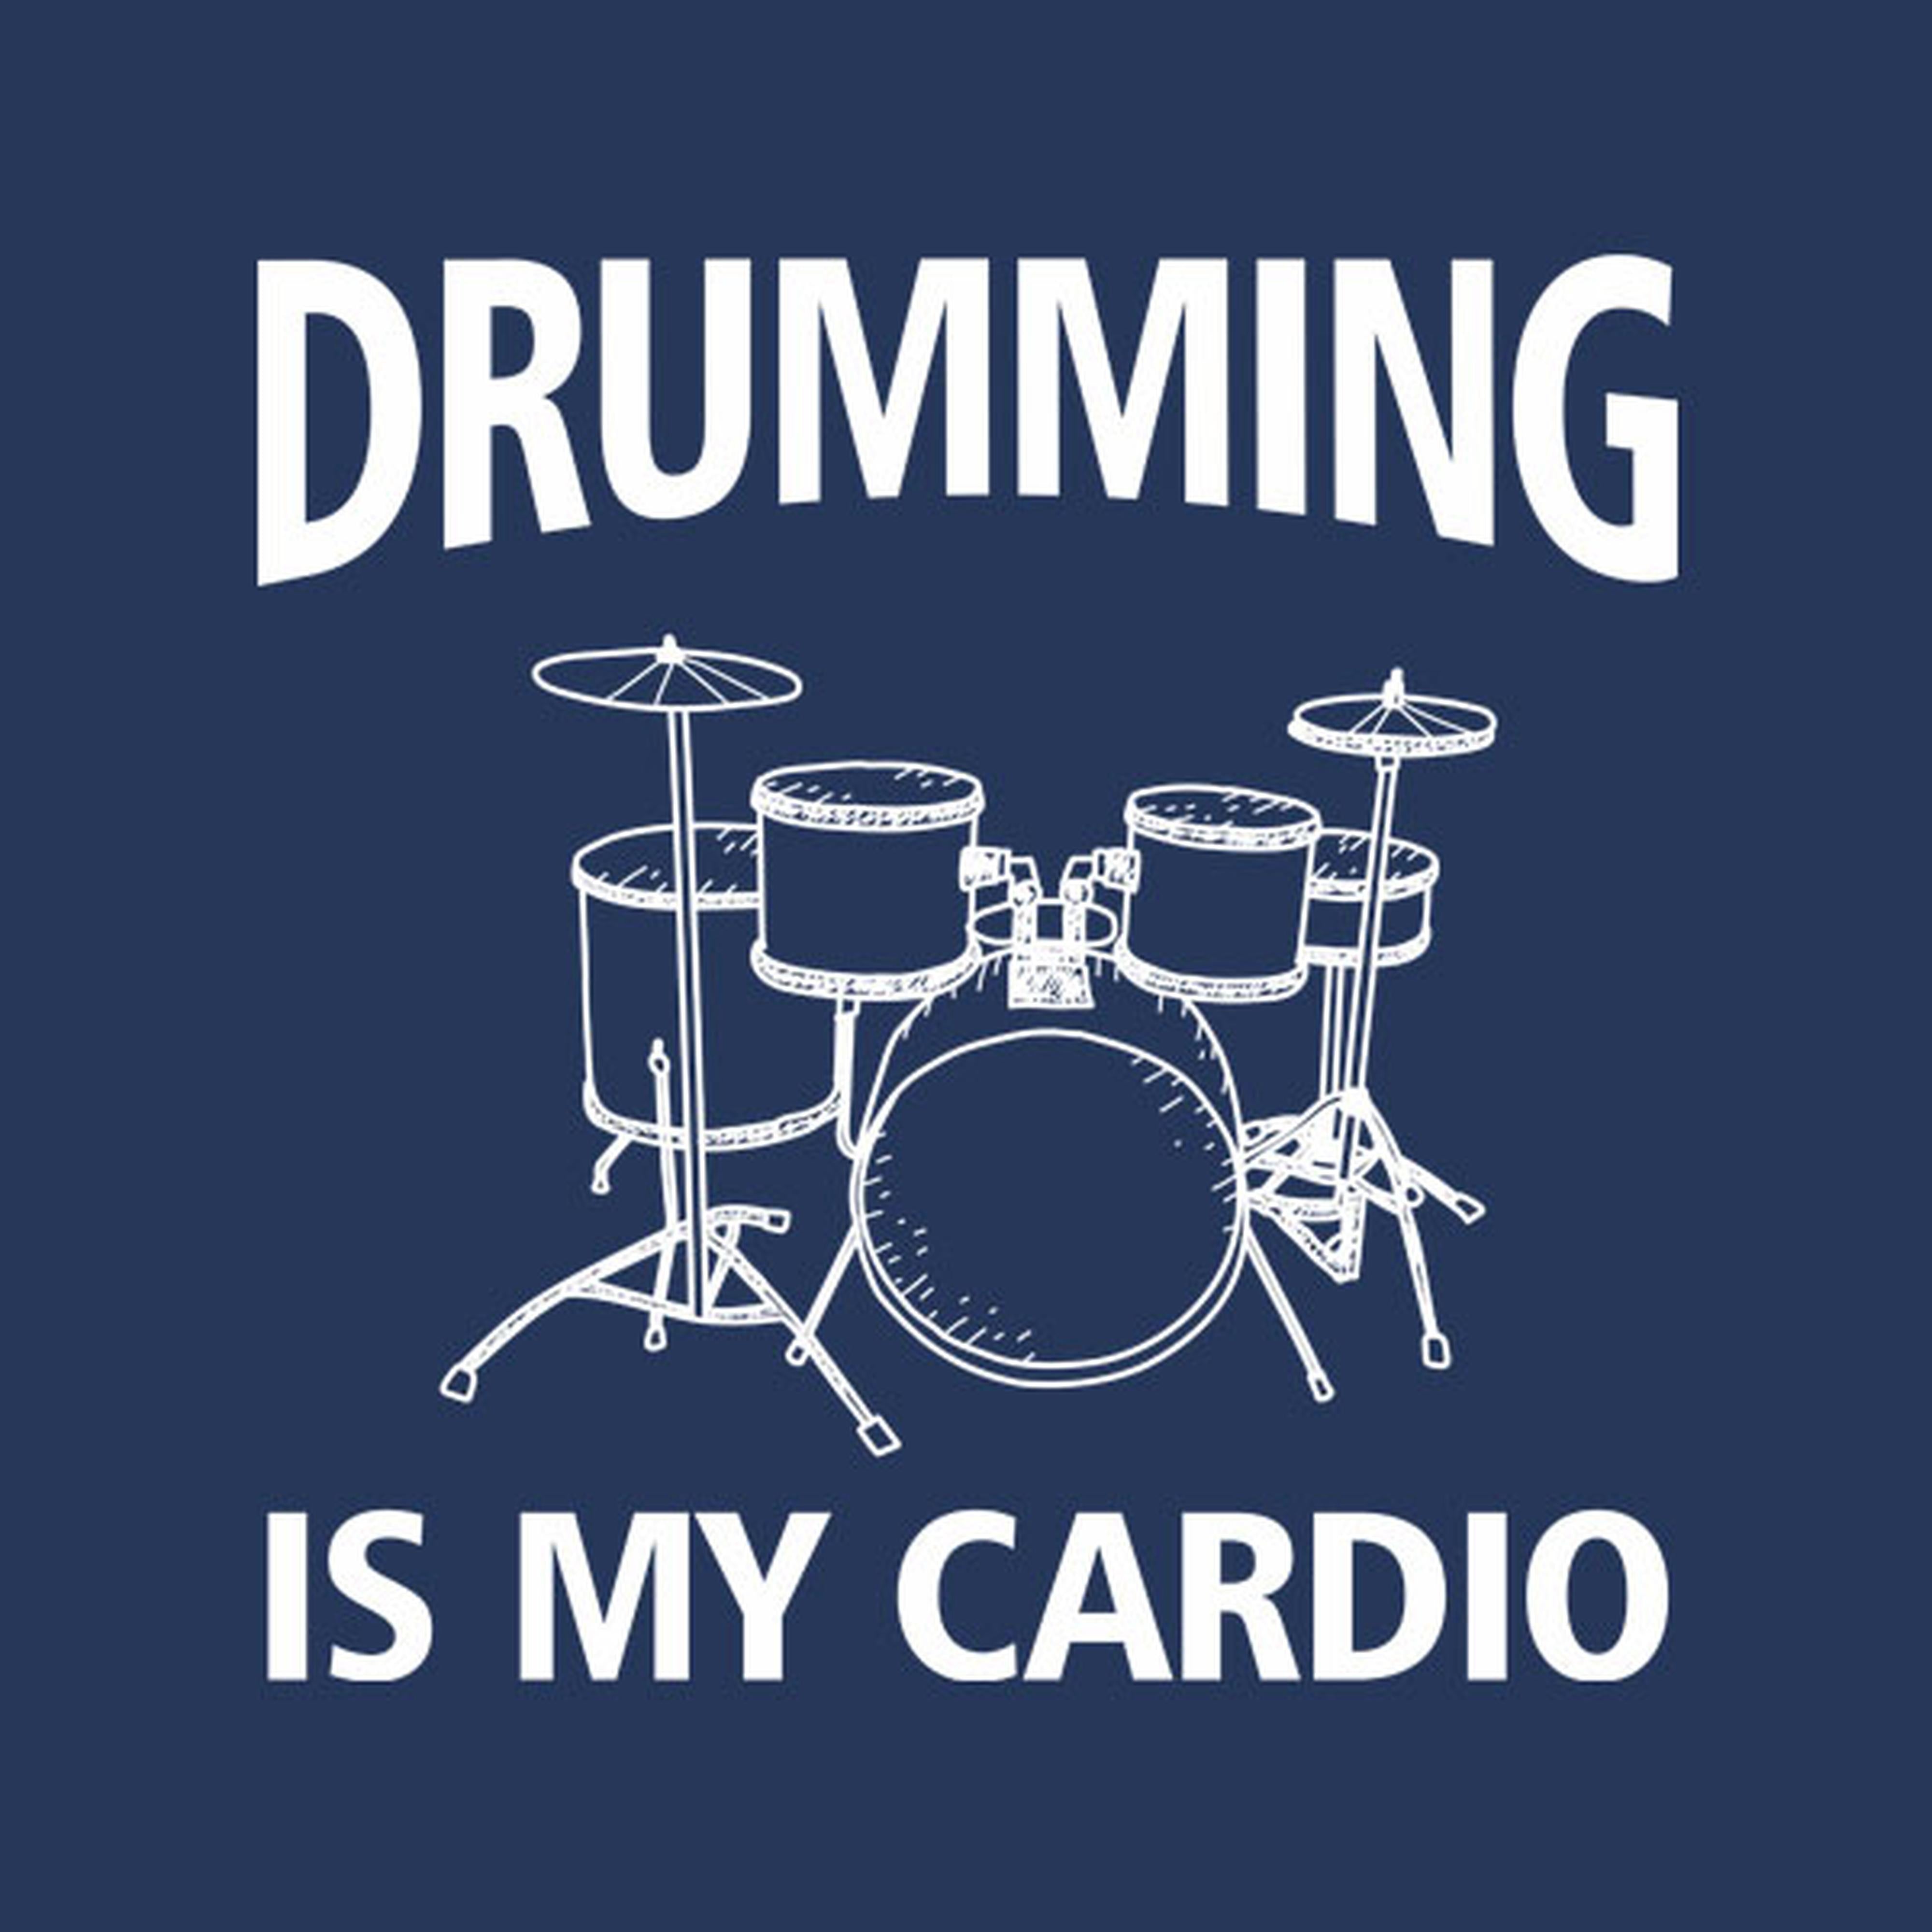 Drumming is my cardio - T-shirt